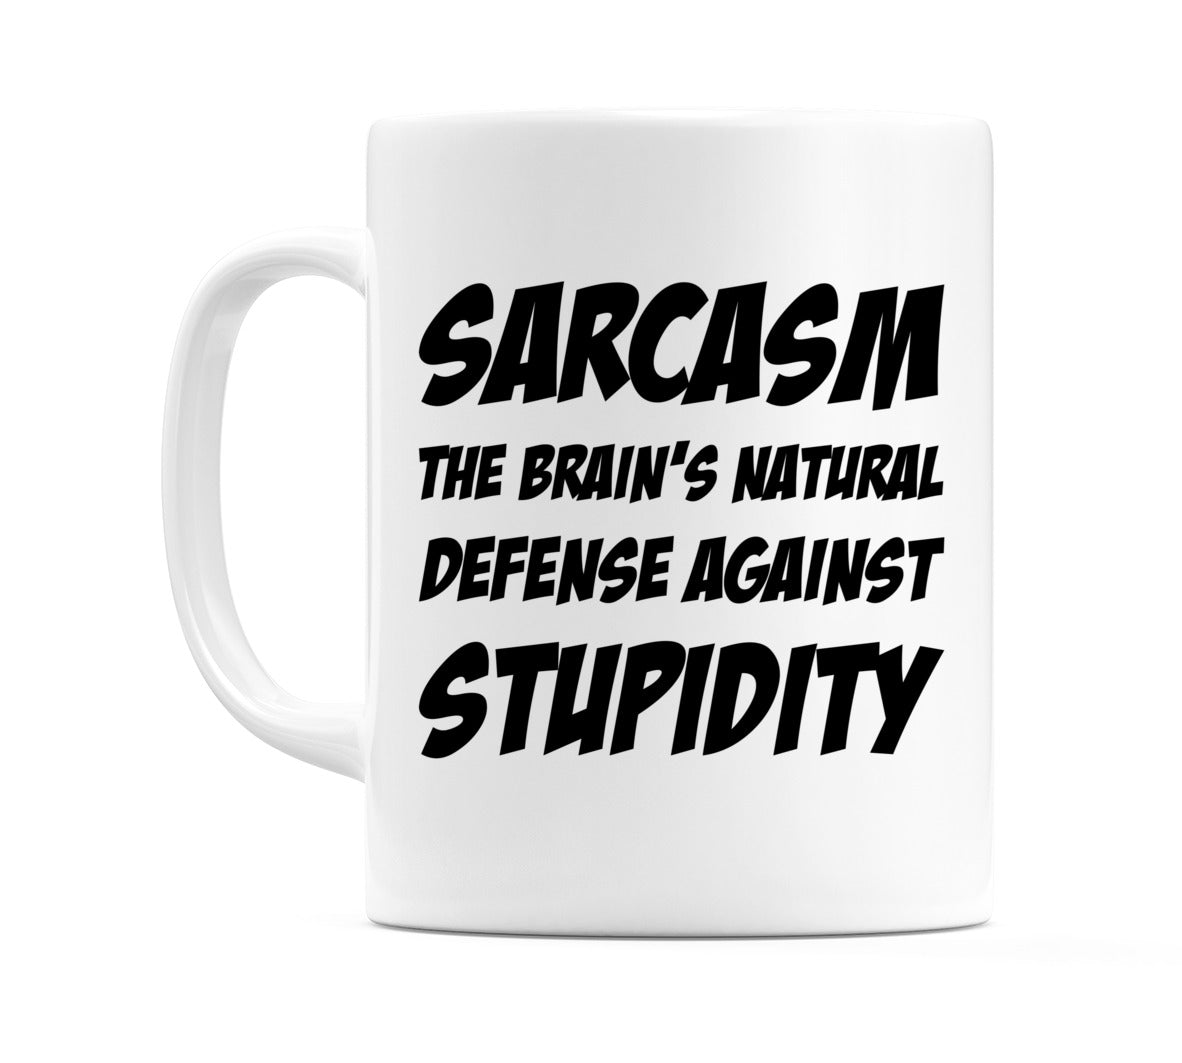 Sarcasm The Brain's Natural Defense Against Stupidity Mug